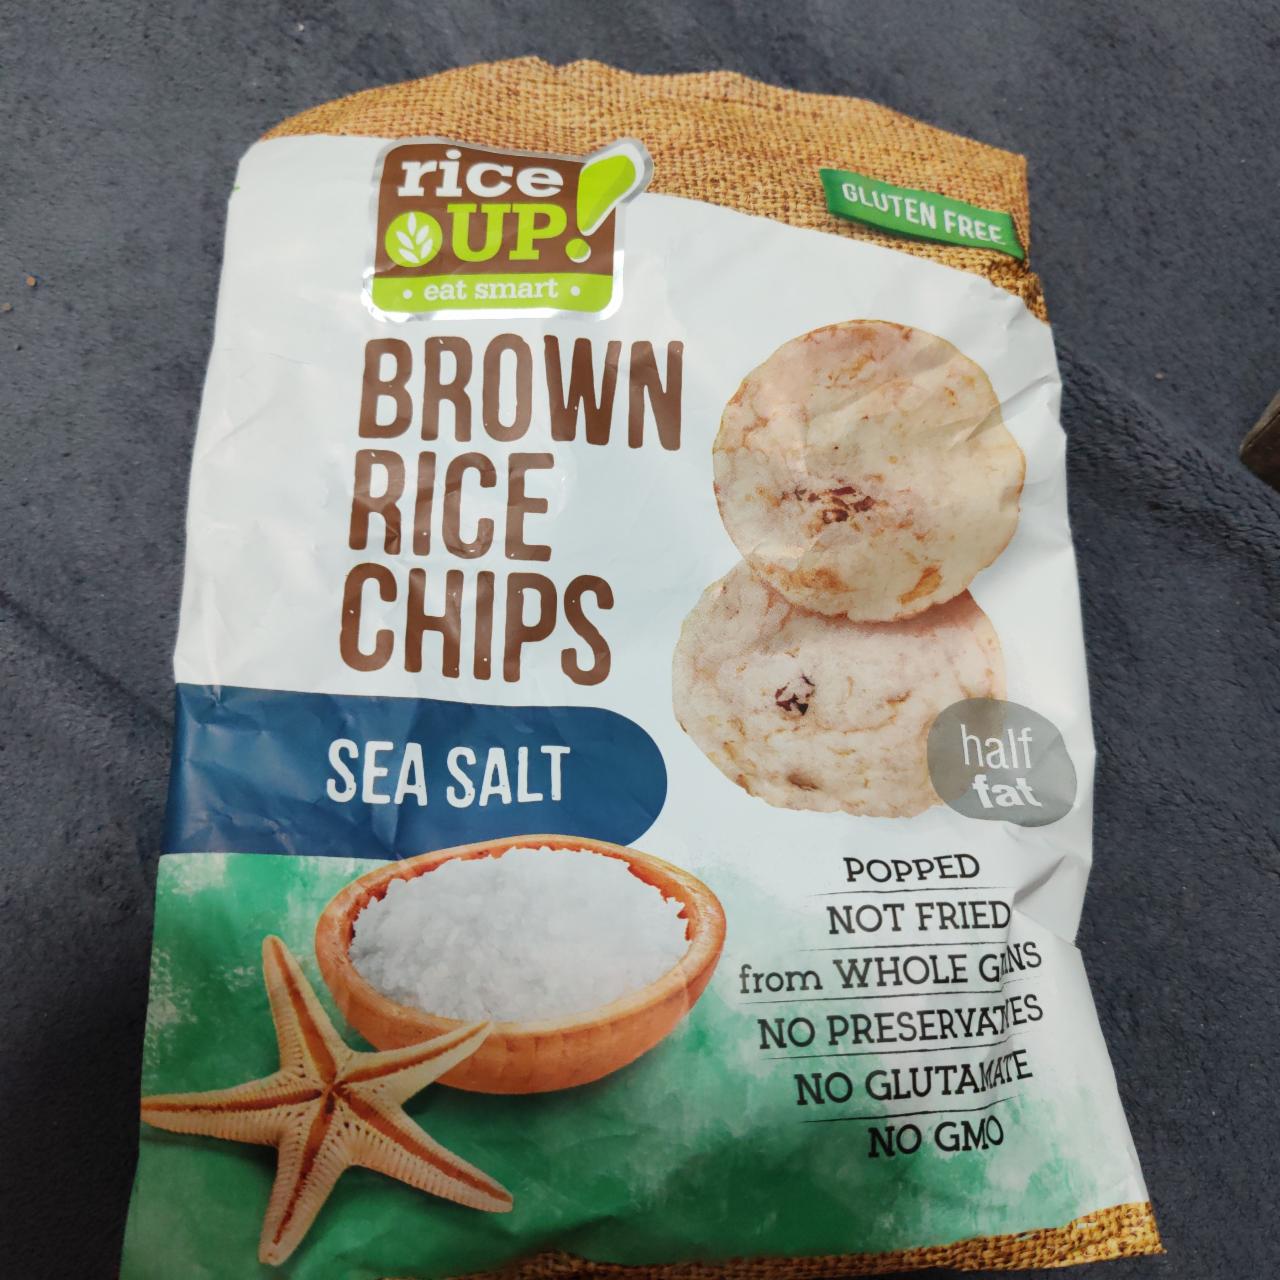 Képek - Brown rice chips sea salt Rice up!